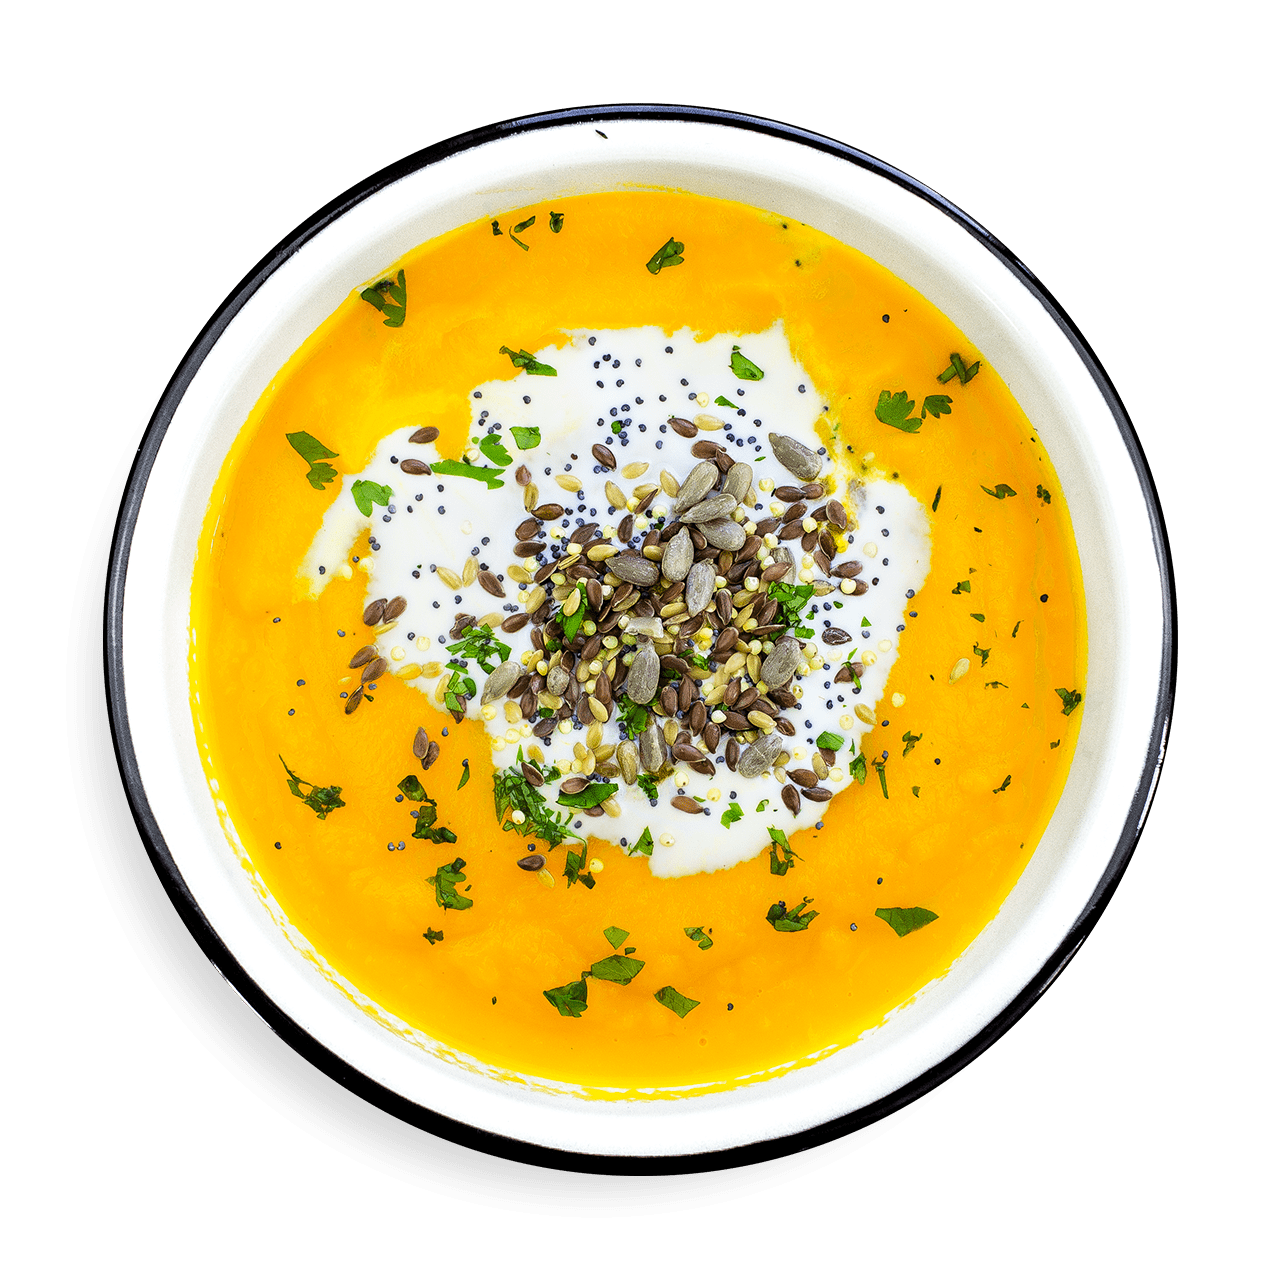 tostibanaan-romige-wortel-soep